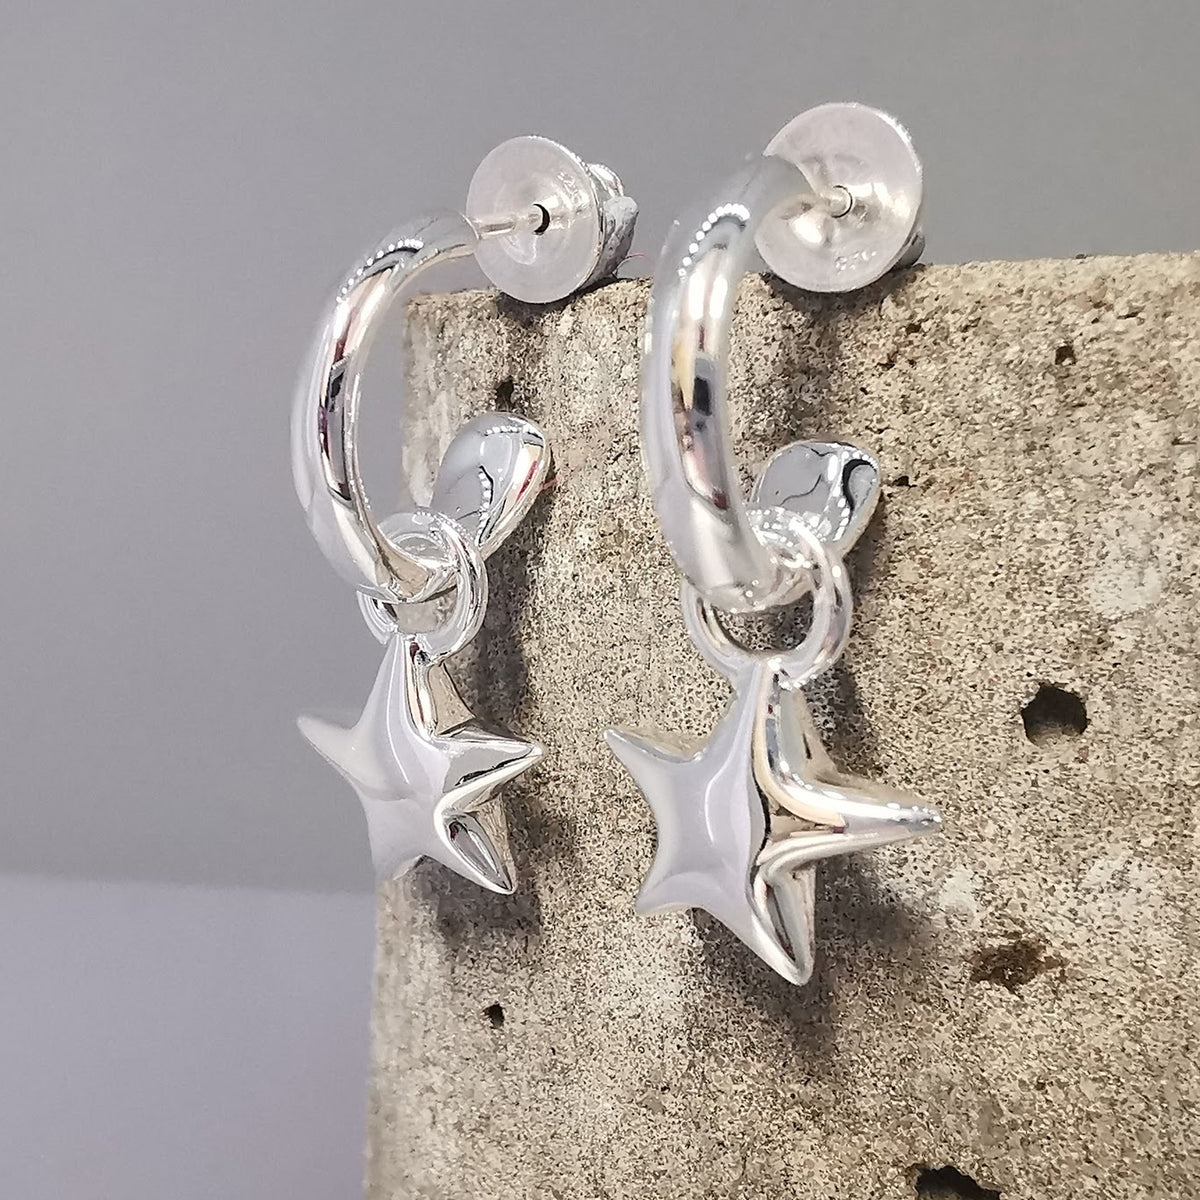 star silver hoop earrings vintage collection scarlett jewellery